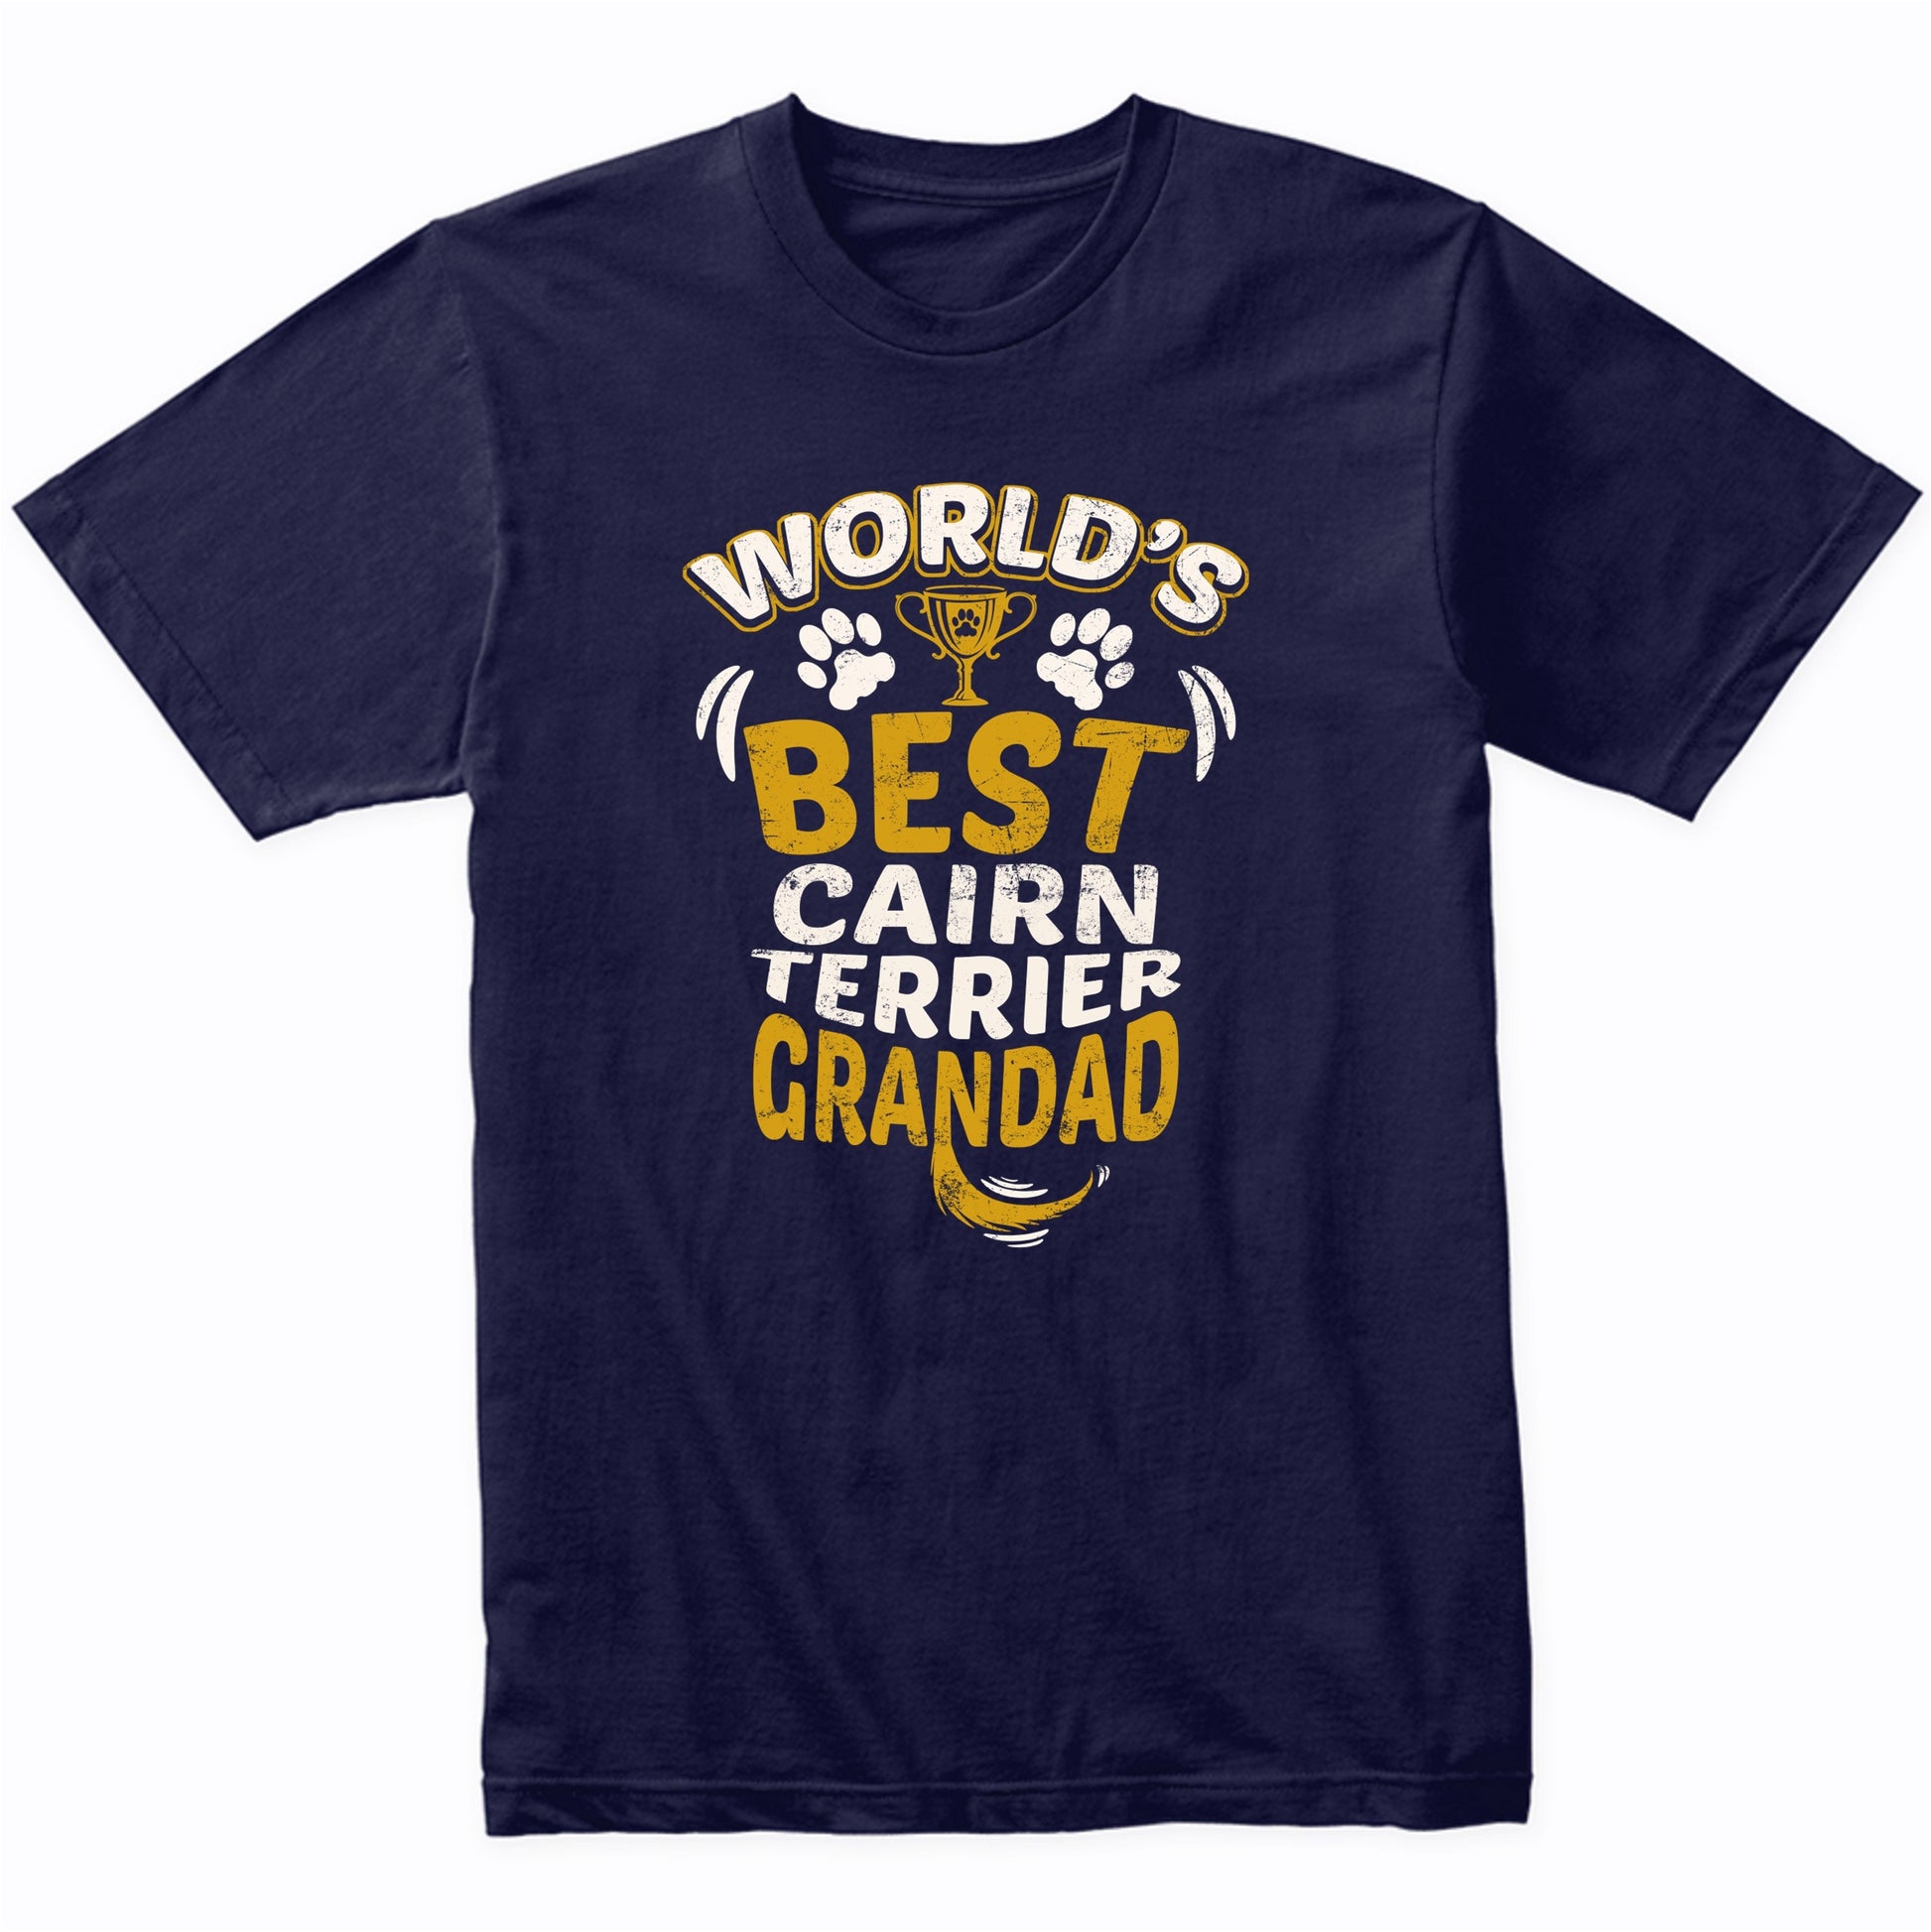 World's Best Cairn Terrier Grandad Graphic T-Shirt